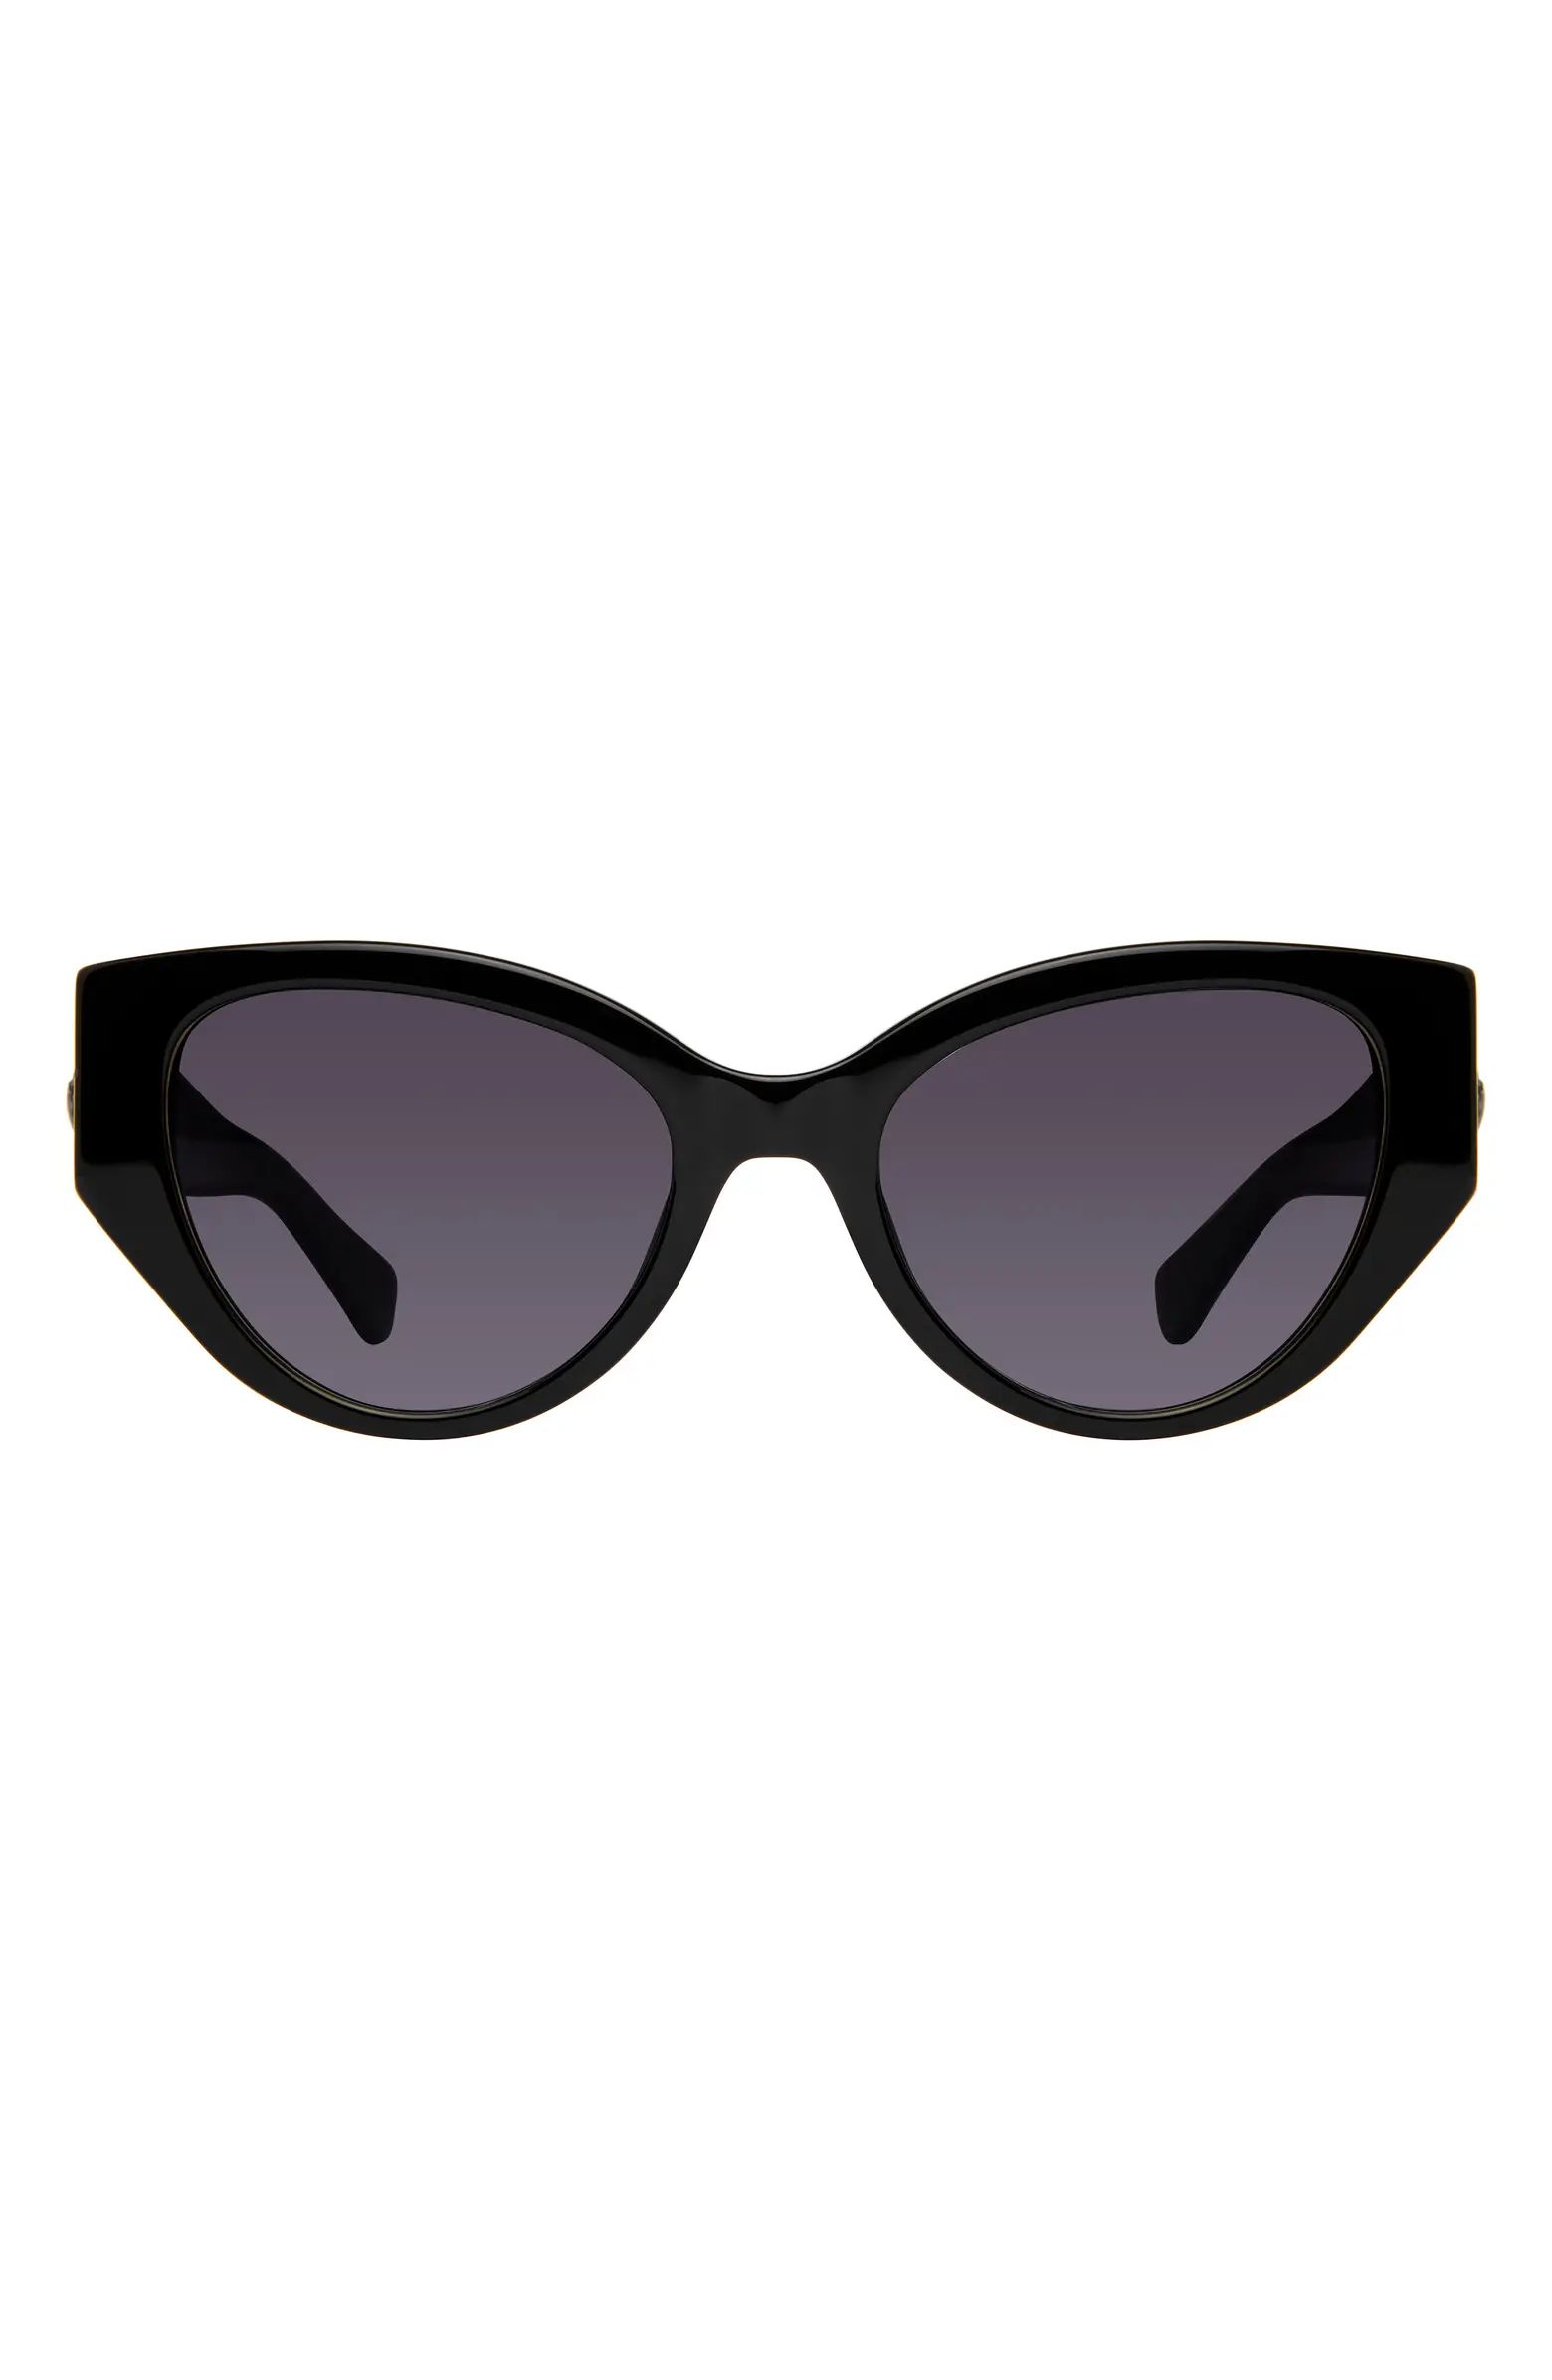 Kurt Geiger London Shoreditch 53mm Gradient Round Sunglasses | Nordstrom | Nordstrom